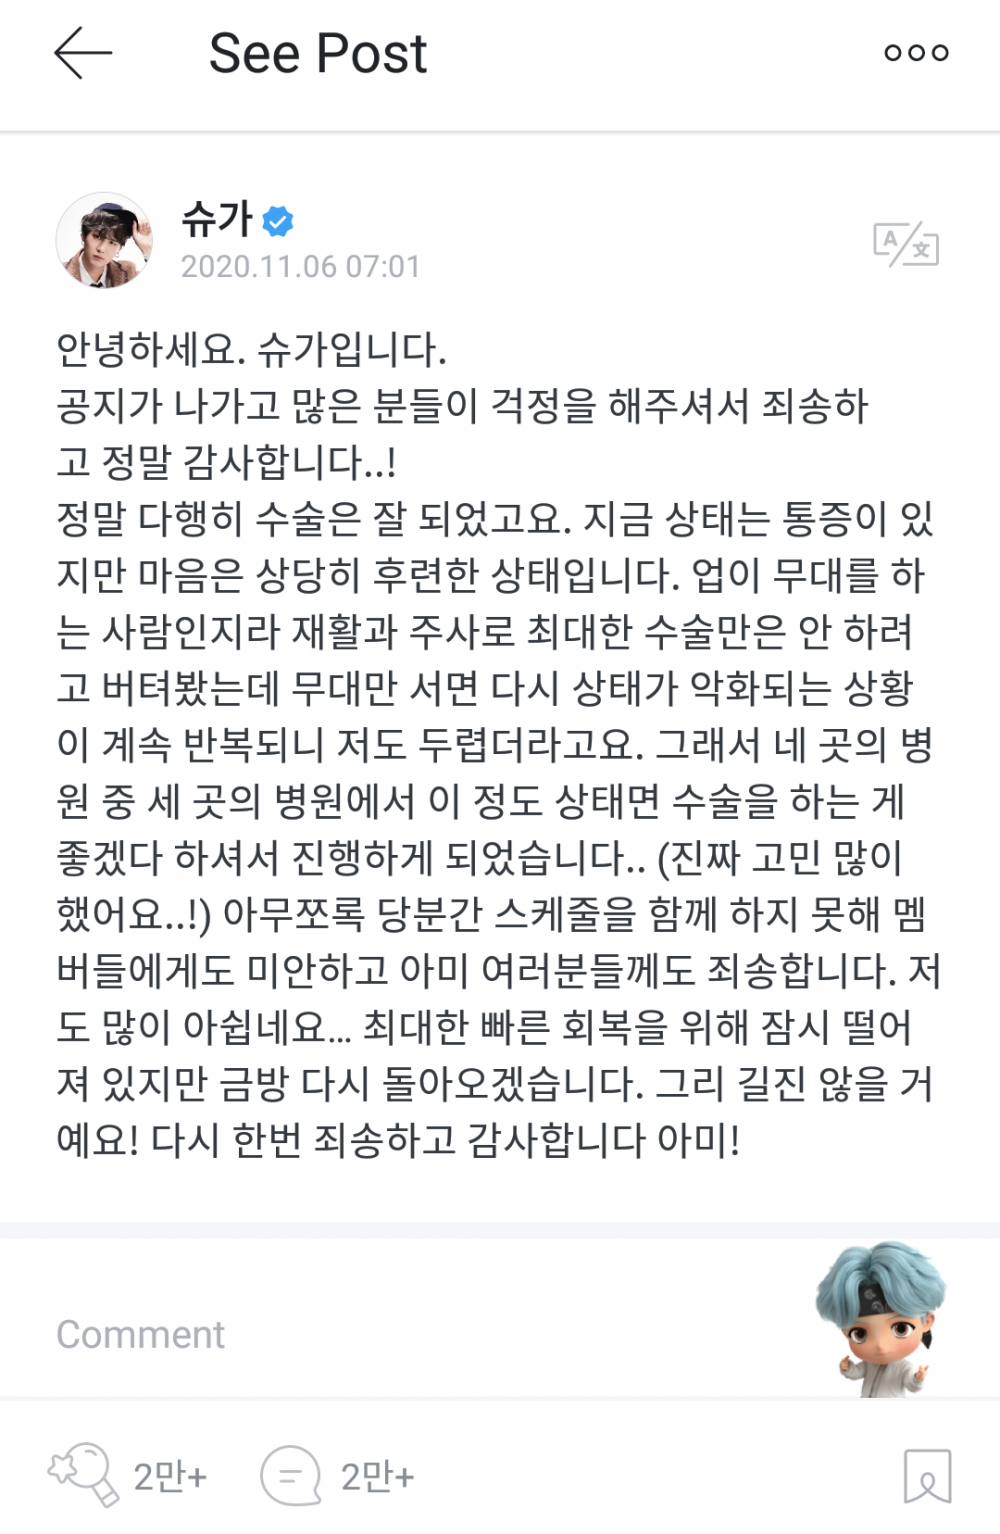 Шуга из BTS оставил тёплое послание фанатам после операции